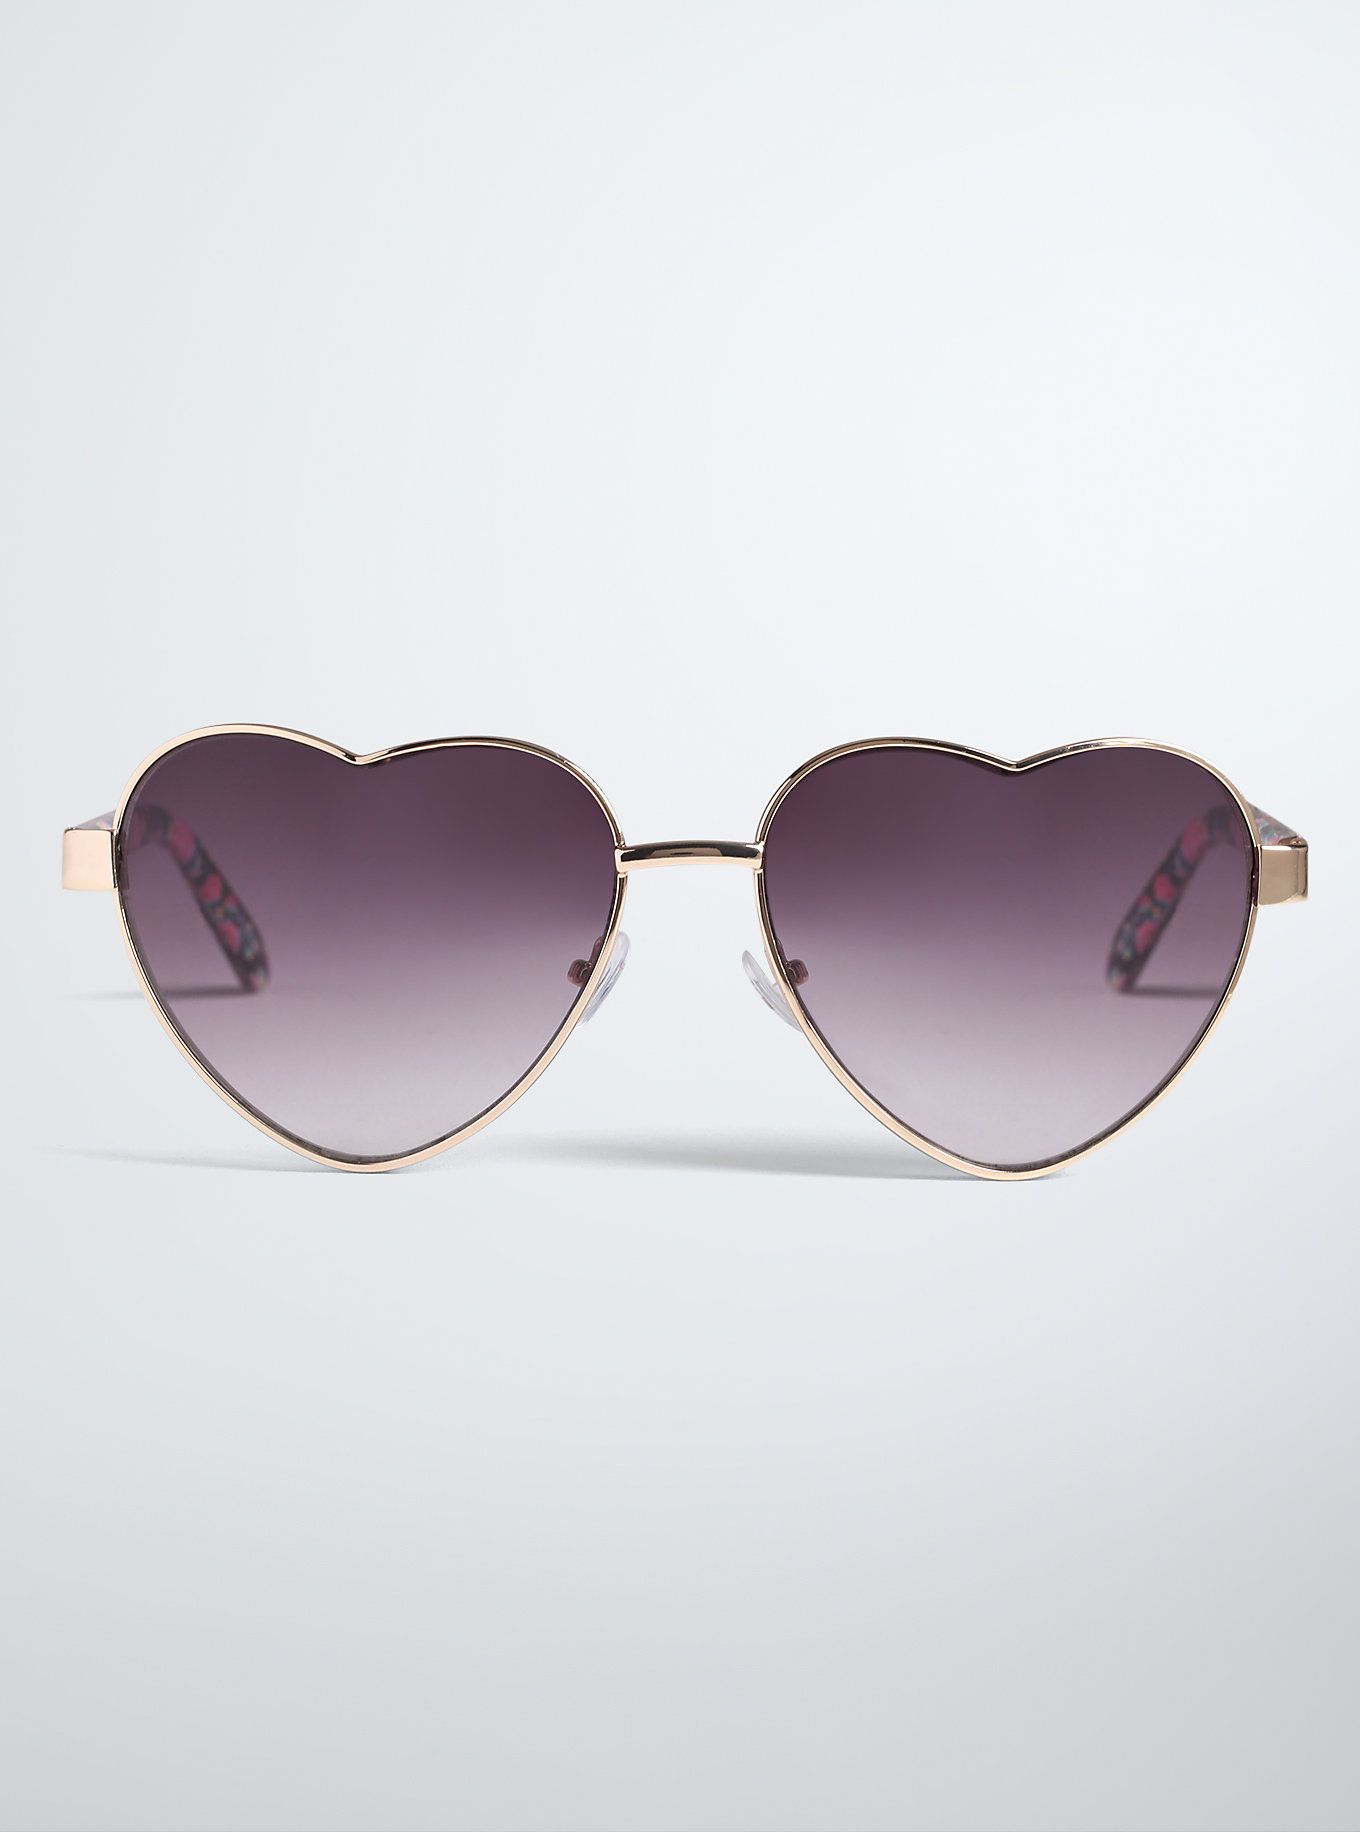 Heart Rose Print Sunglasses | Mr robot, Daphne blake and Marvel